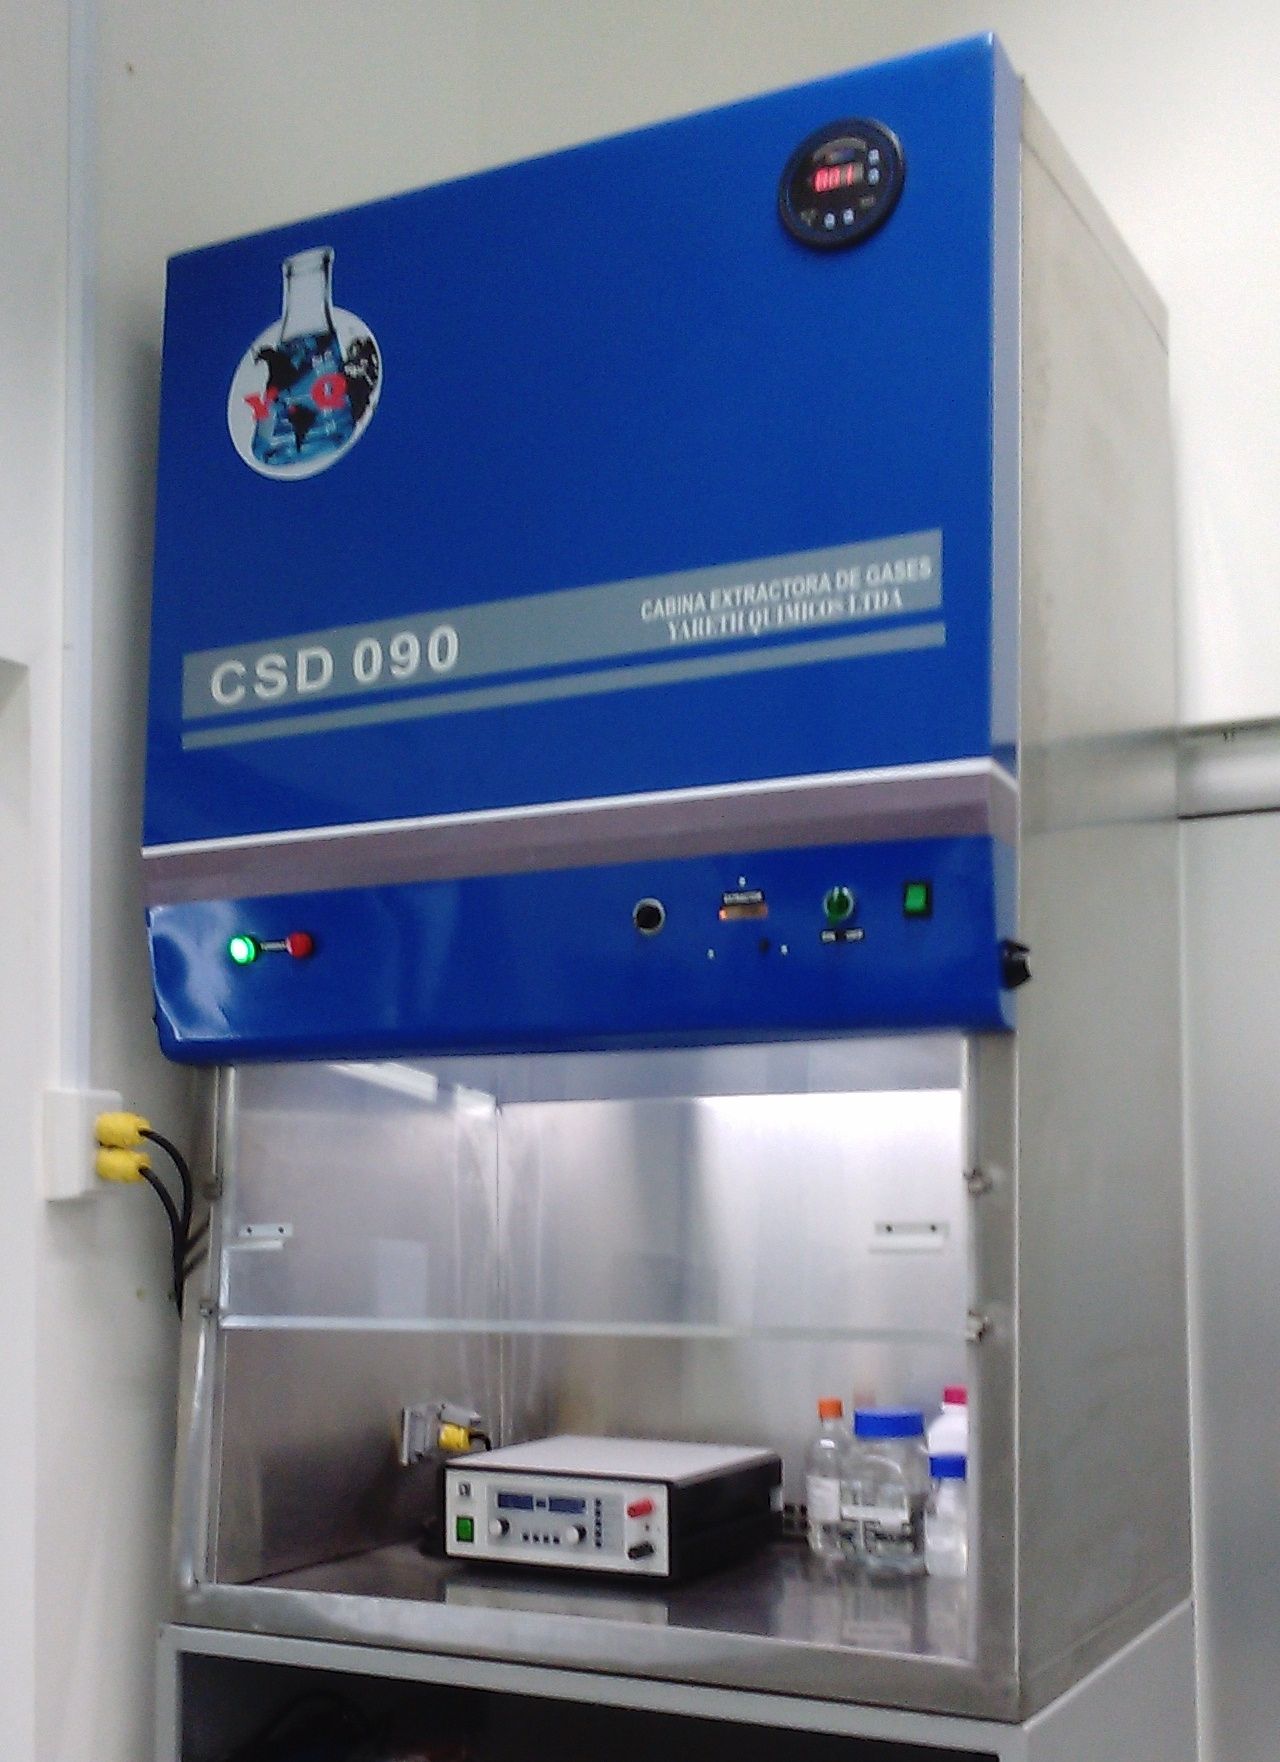 cabina de extraccion de gases CSD